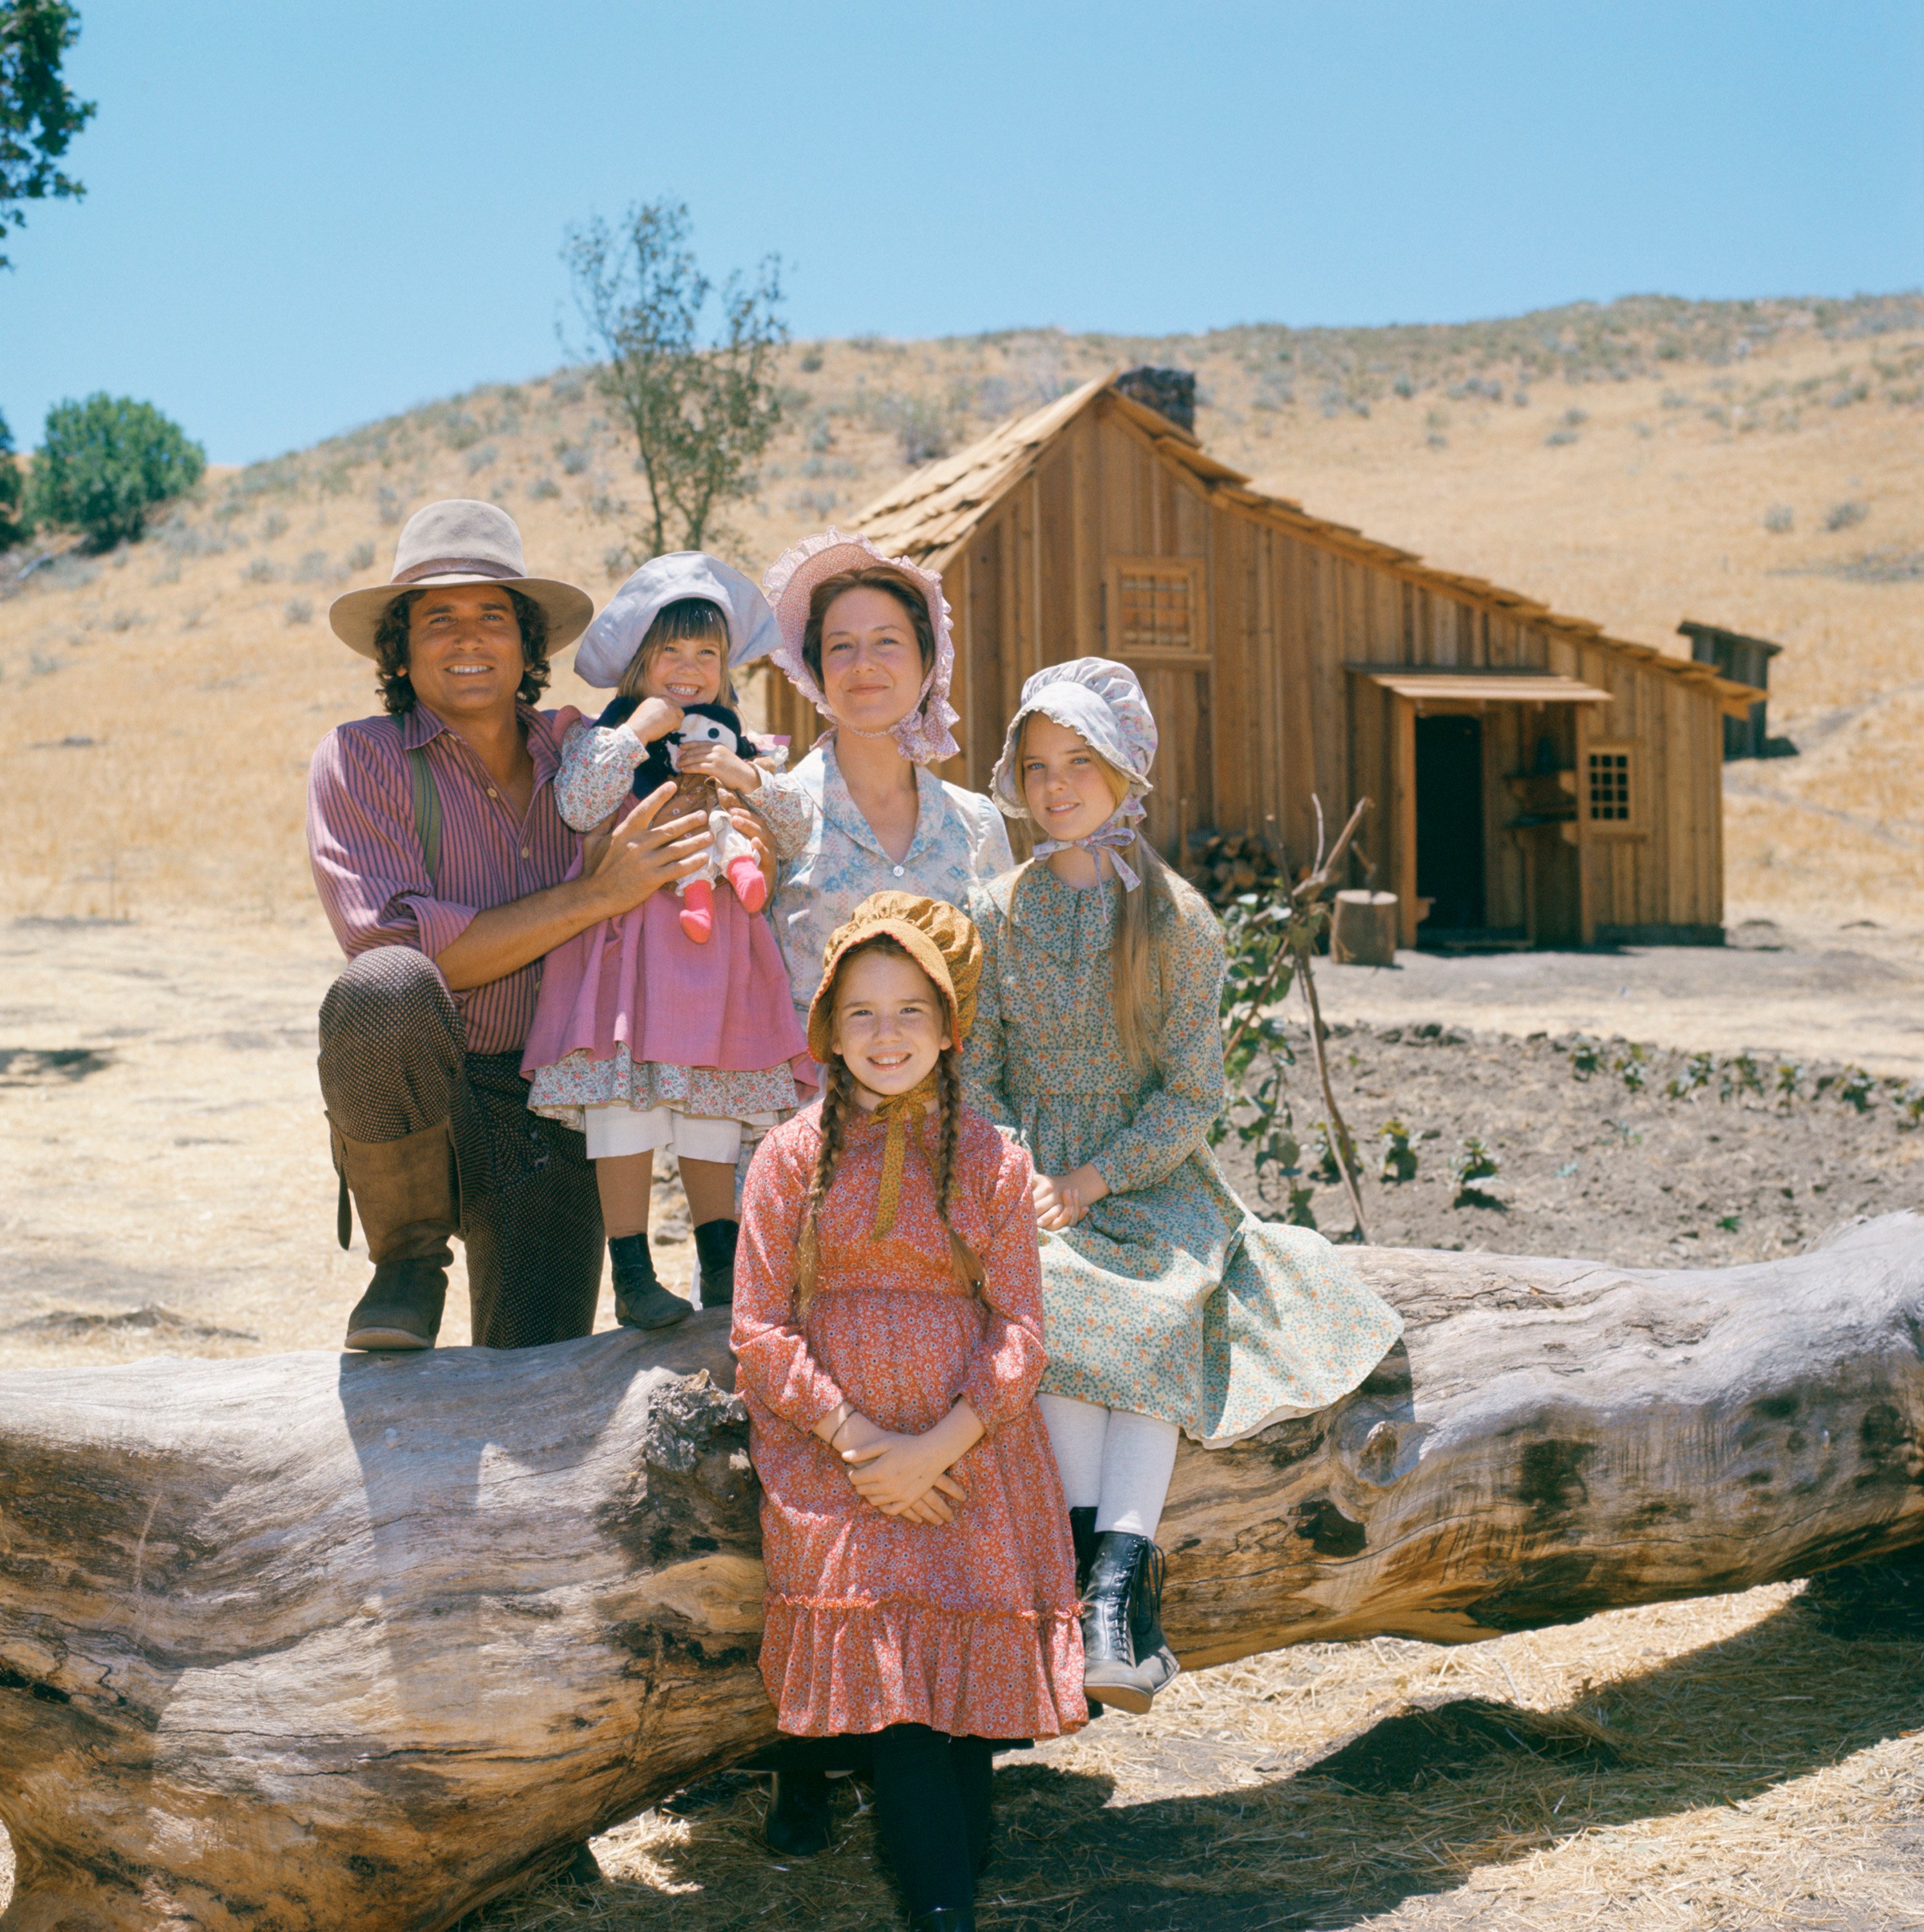 Cast of 'Little House on the Prairie' | Michael Landon, Lindsay or Sydney Greenbush, Karen Grassle, Melisssa Sue Anderson, and Melissa Gilbert